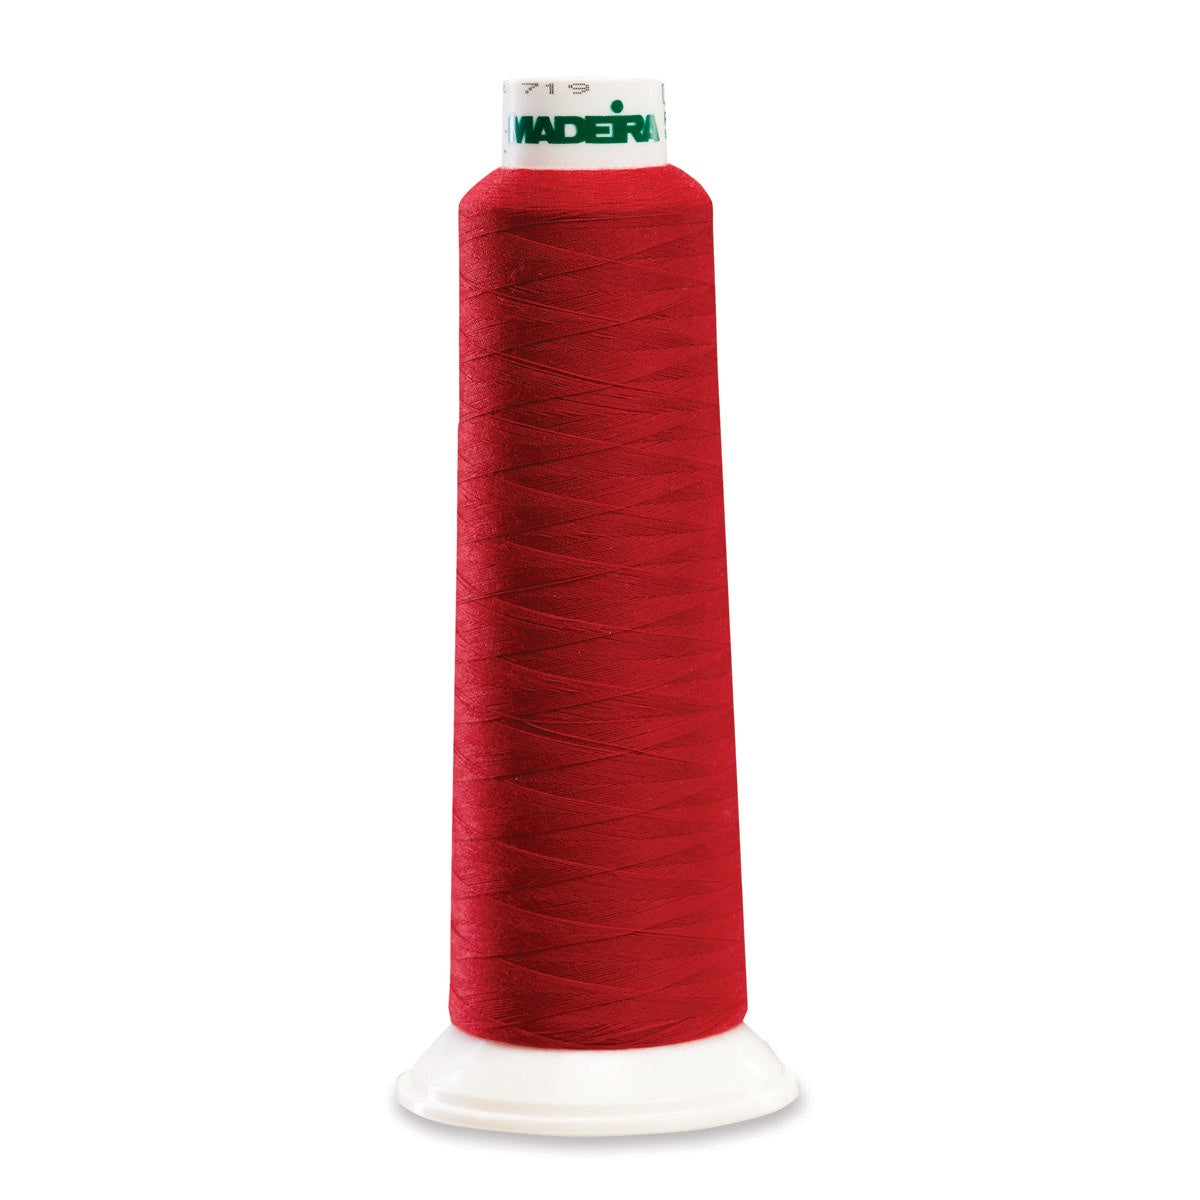 Aerolock Serger Thread - Deep Red 9470 - 2000 yd Cone